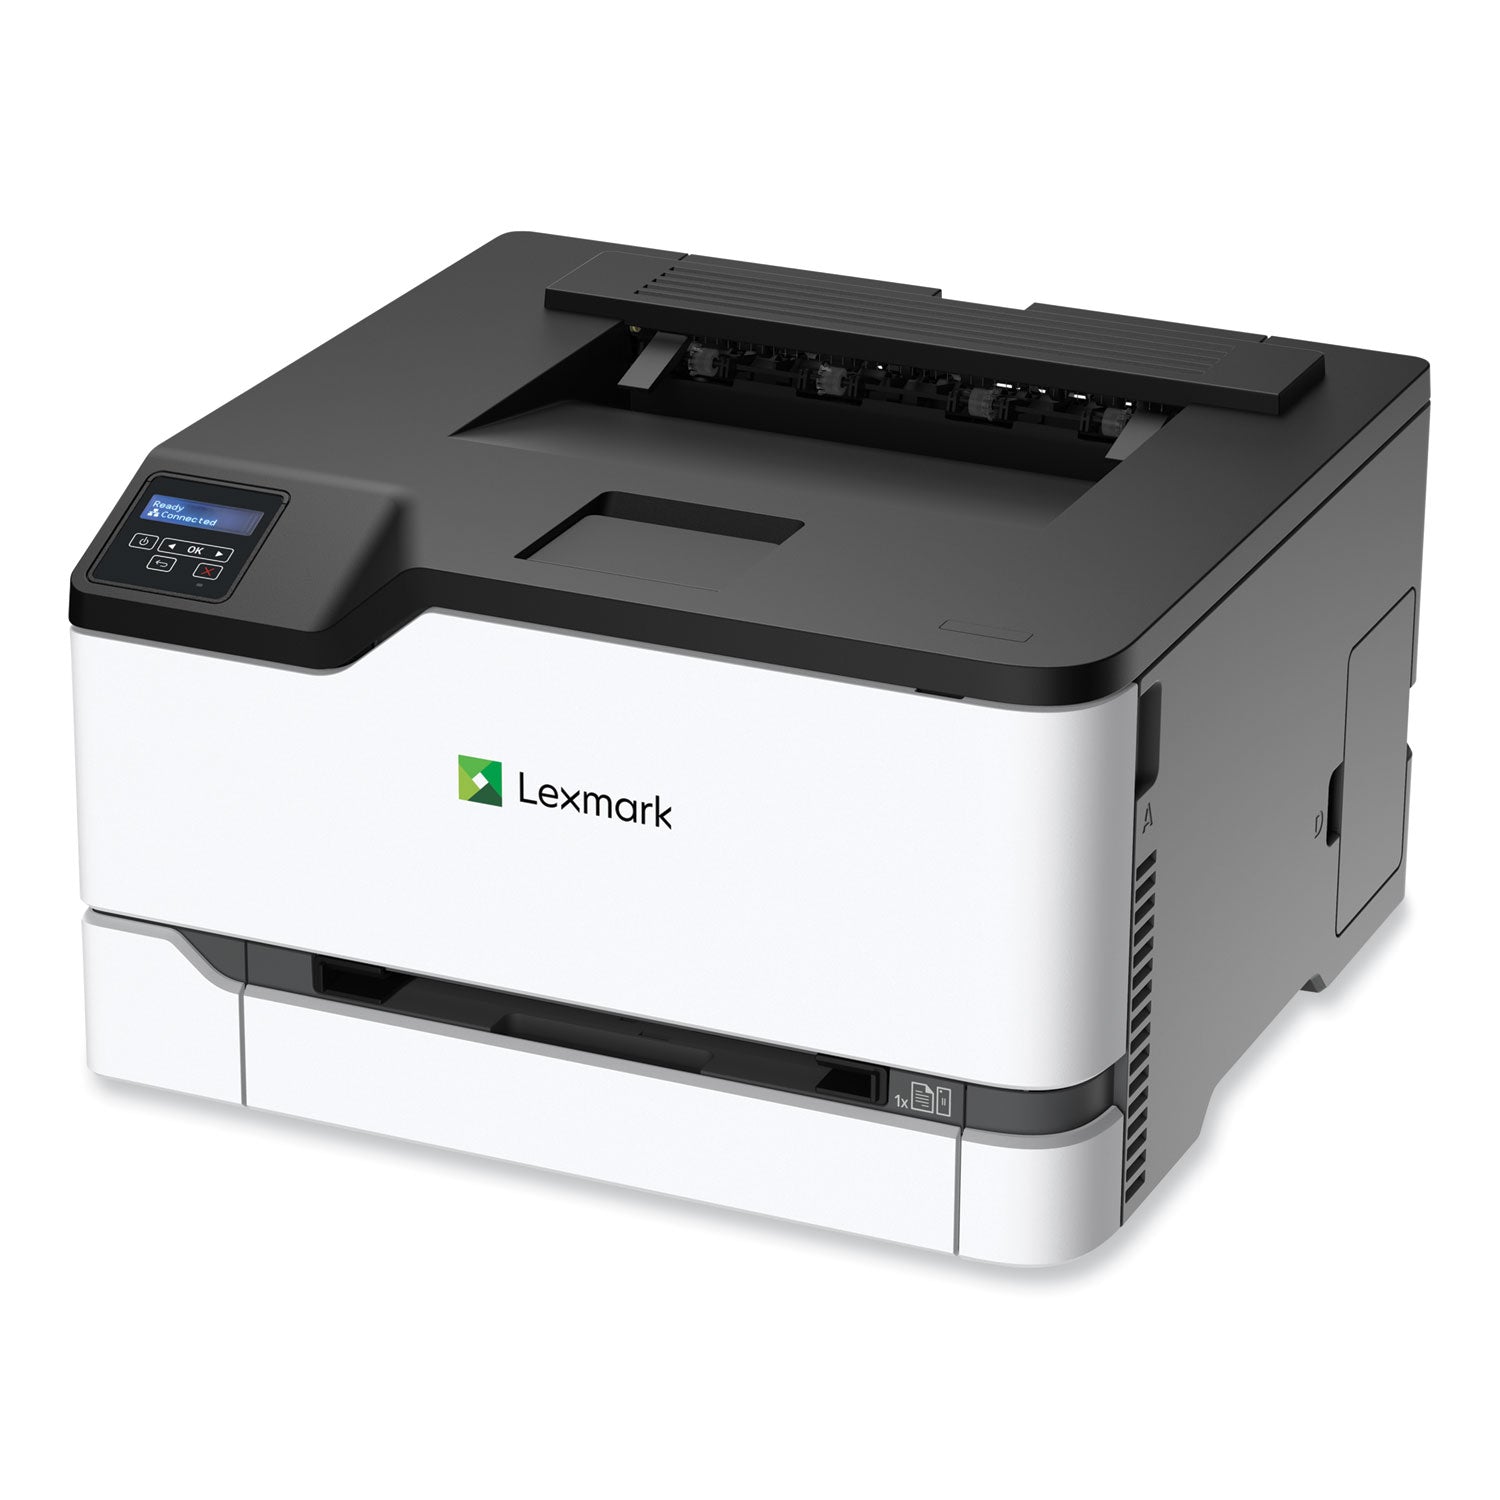 cs331dw-laser-printer_lex40n9020 - 2